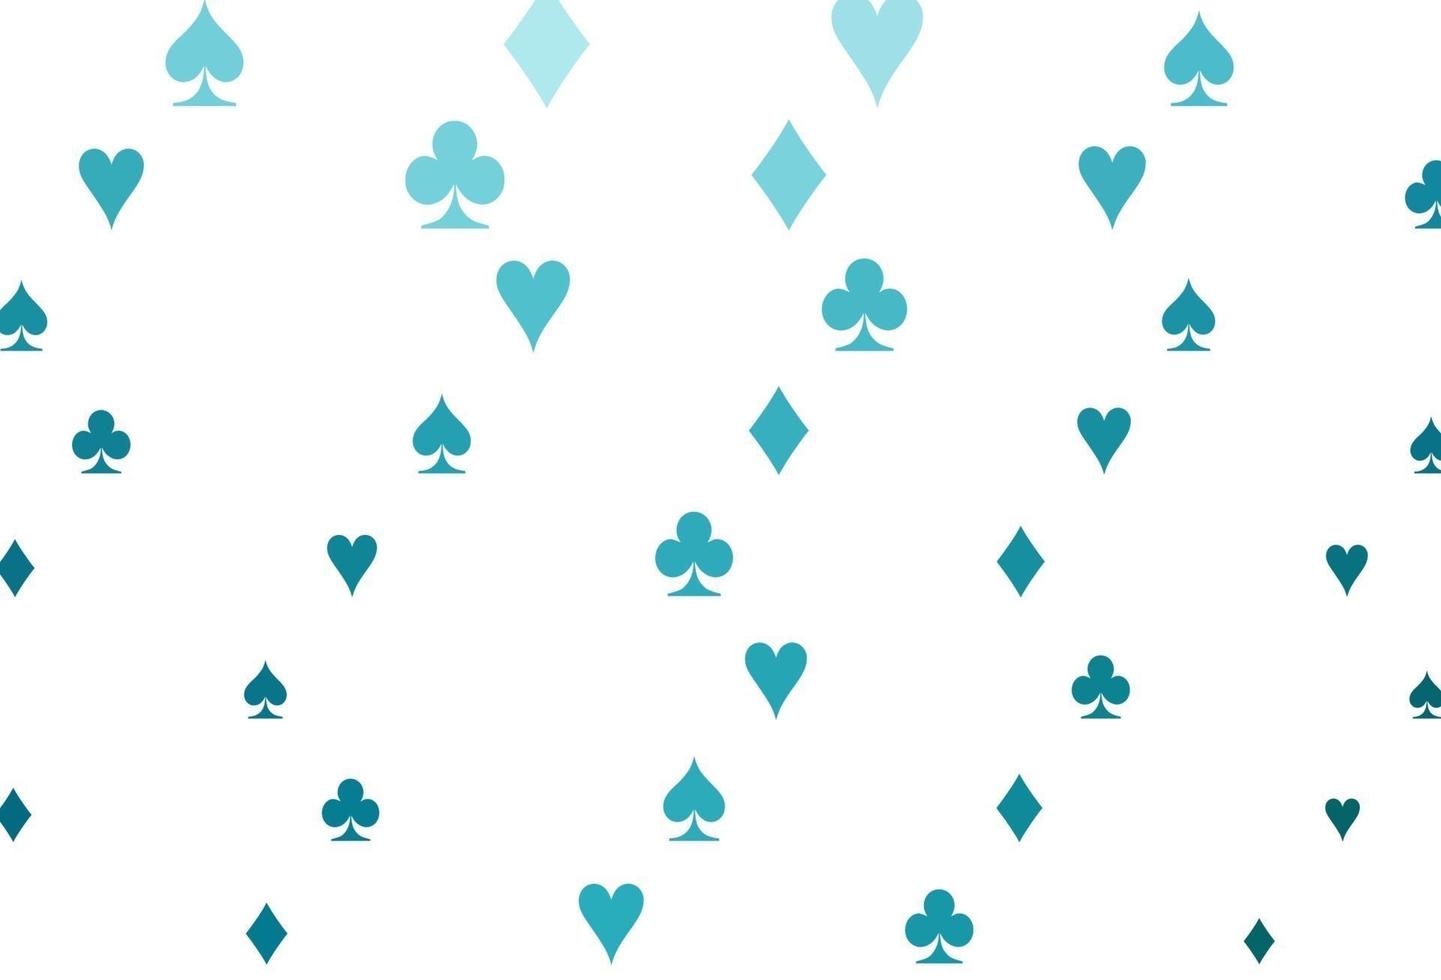 layout de vetor de azul claro com elementos de cartas.